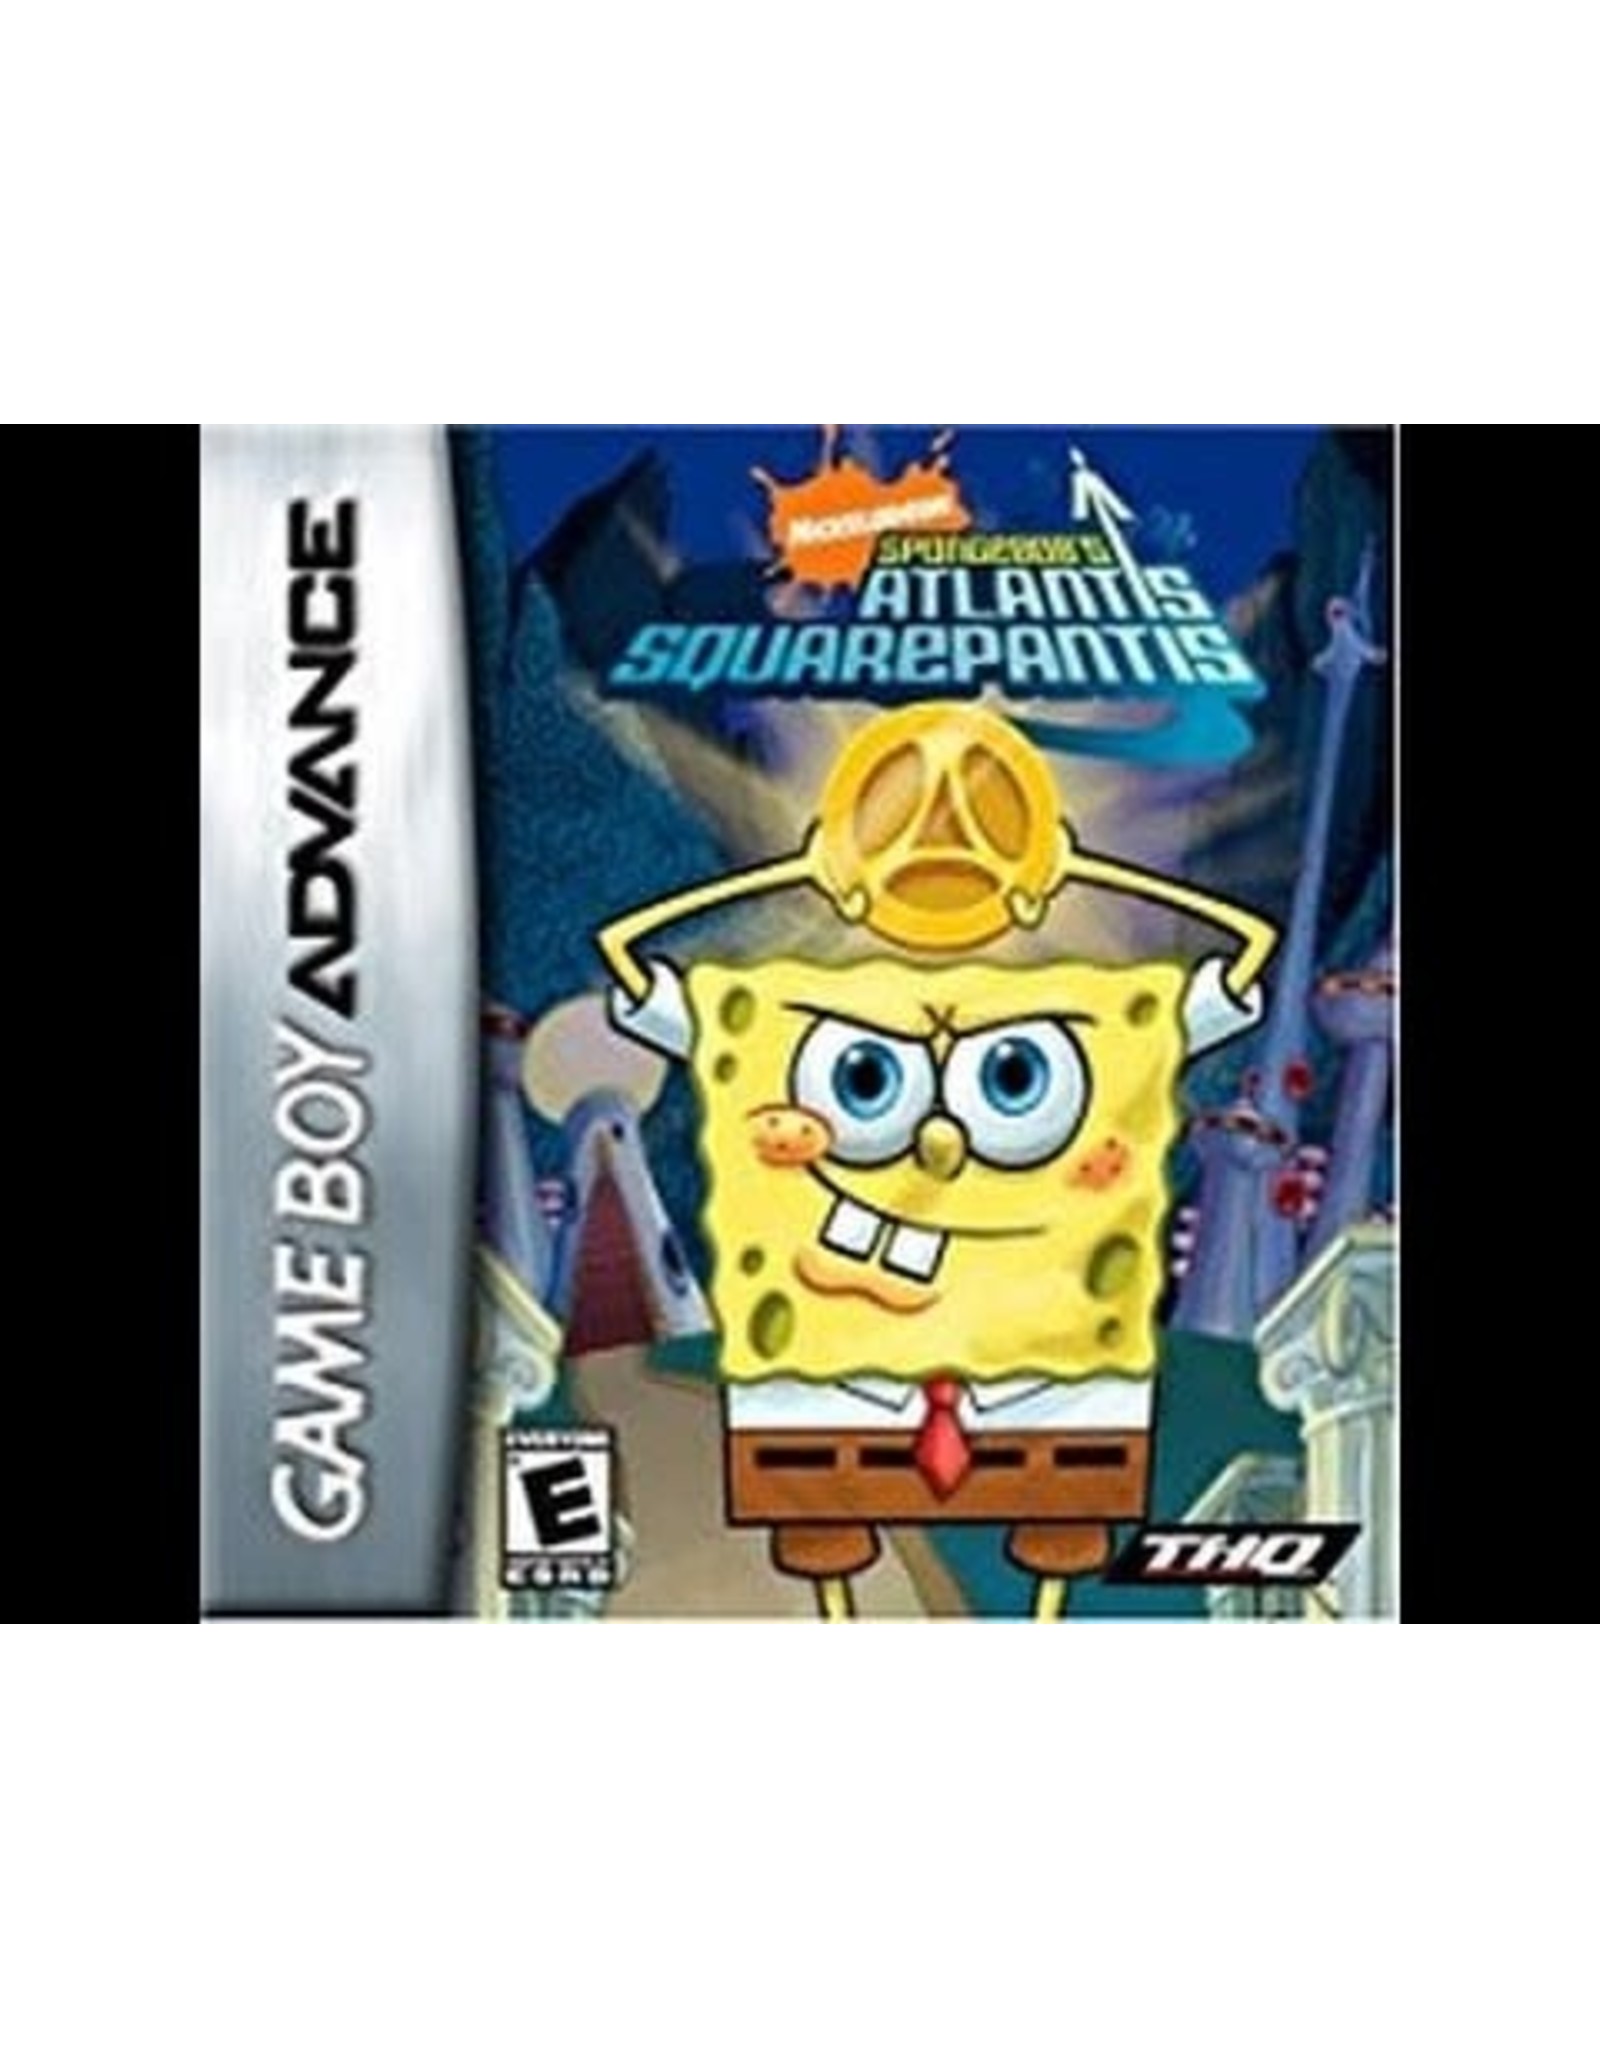 Game Boy Advance SpongeBob SquarePants Atlantis SquarePantis (Cart Only)